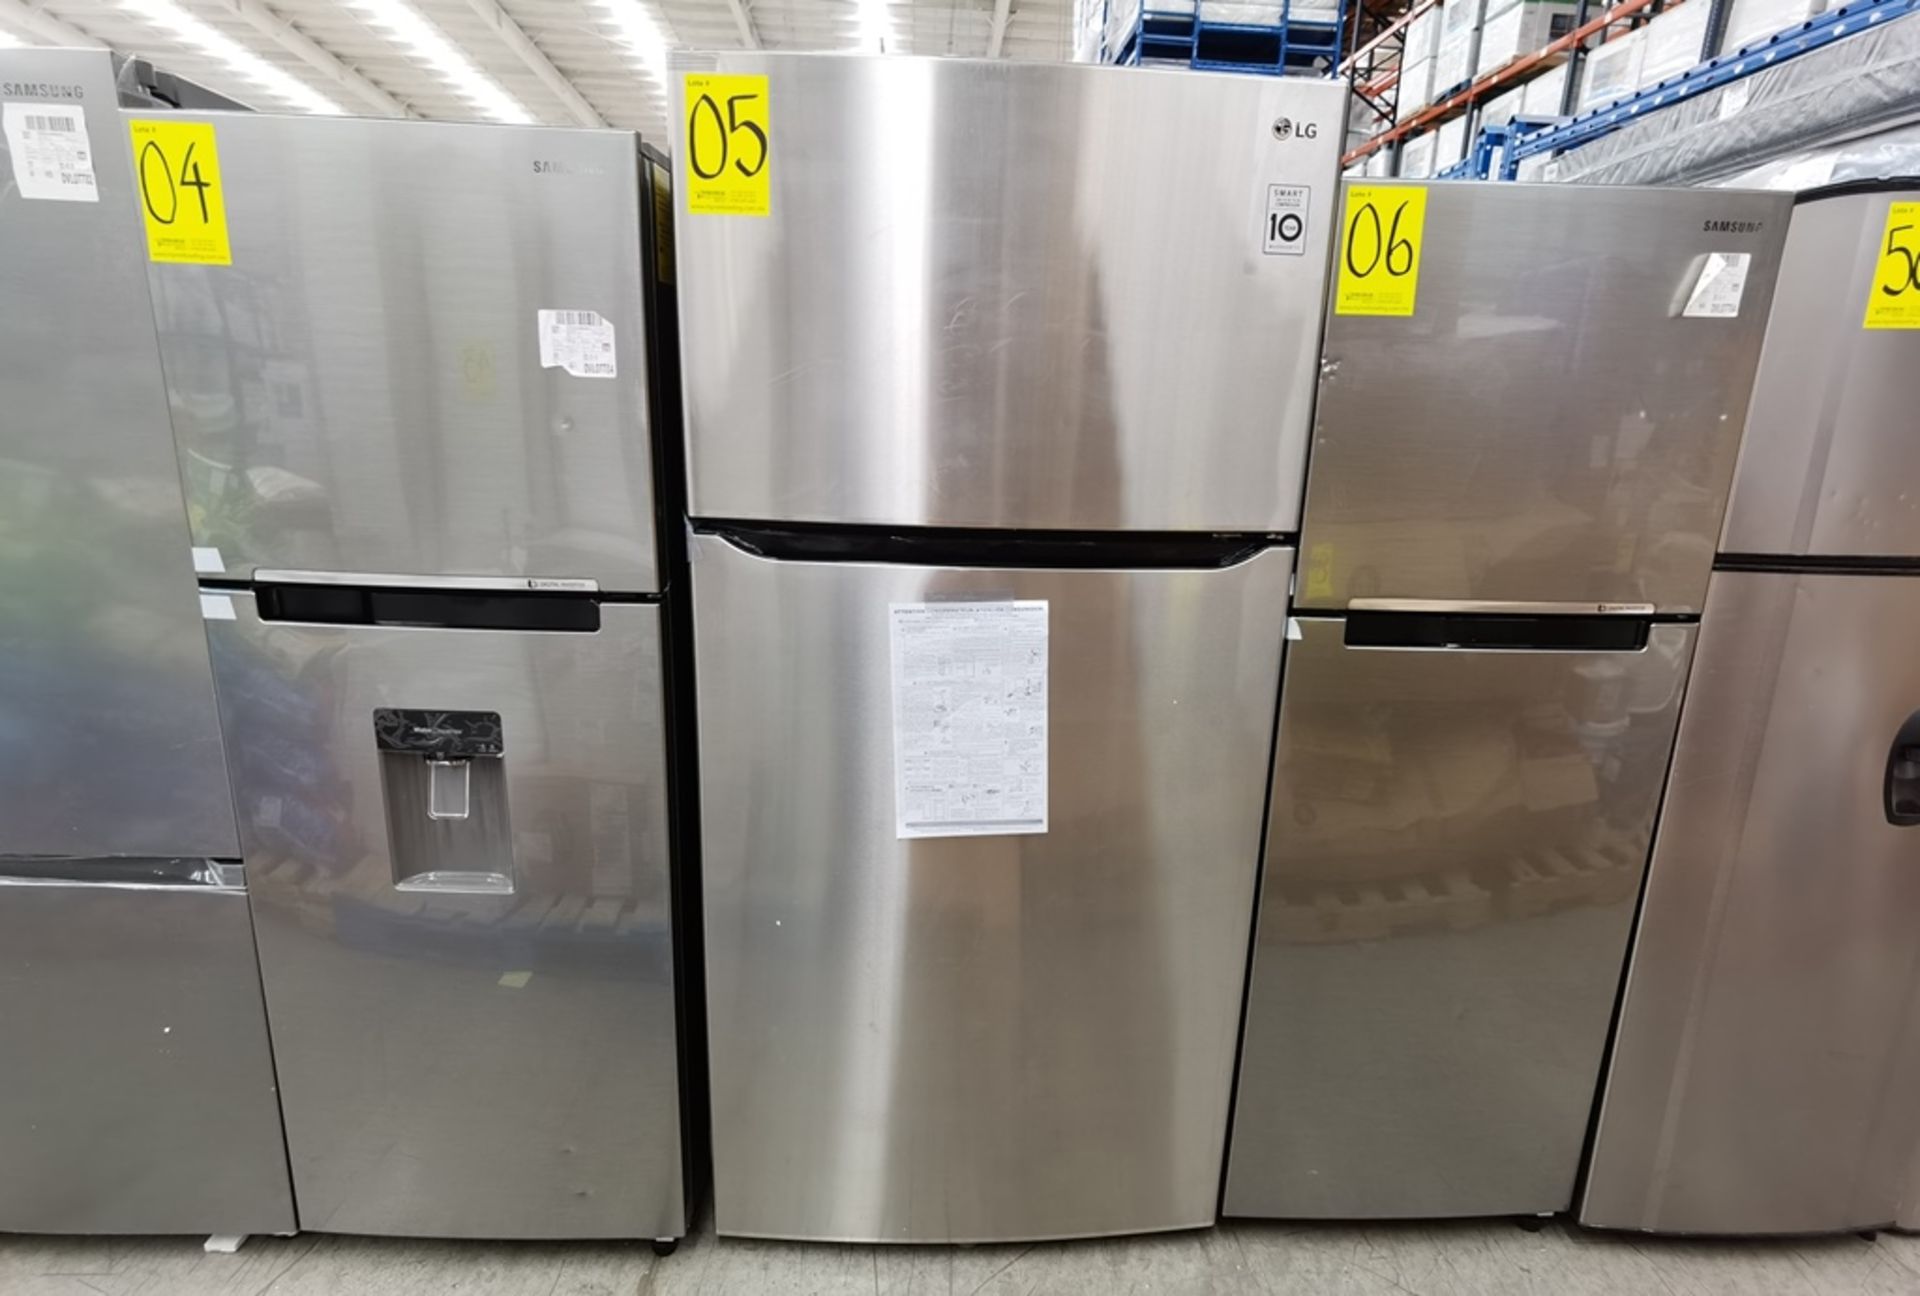 1 Refrigerador Marca LG, Modelo GT24B5, Serie 8556, Color Gris, Daños estéticos, Sin LB. Favor de i - Image 4 of 11